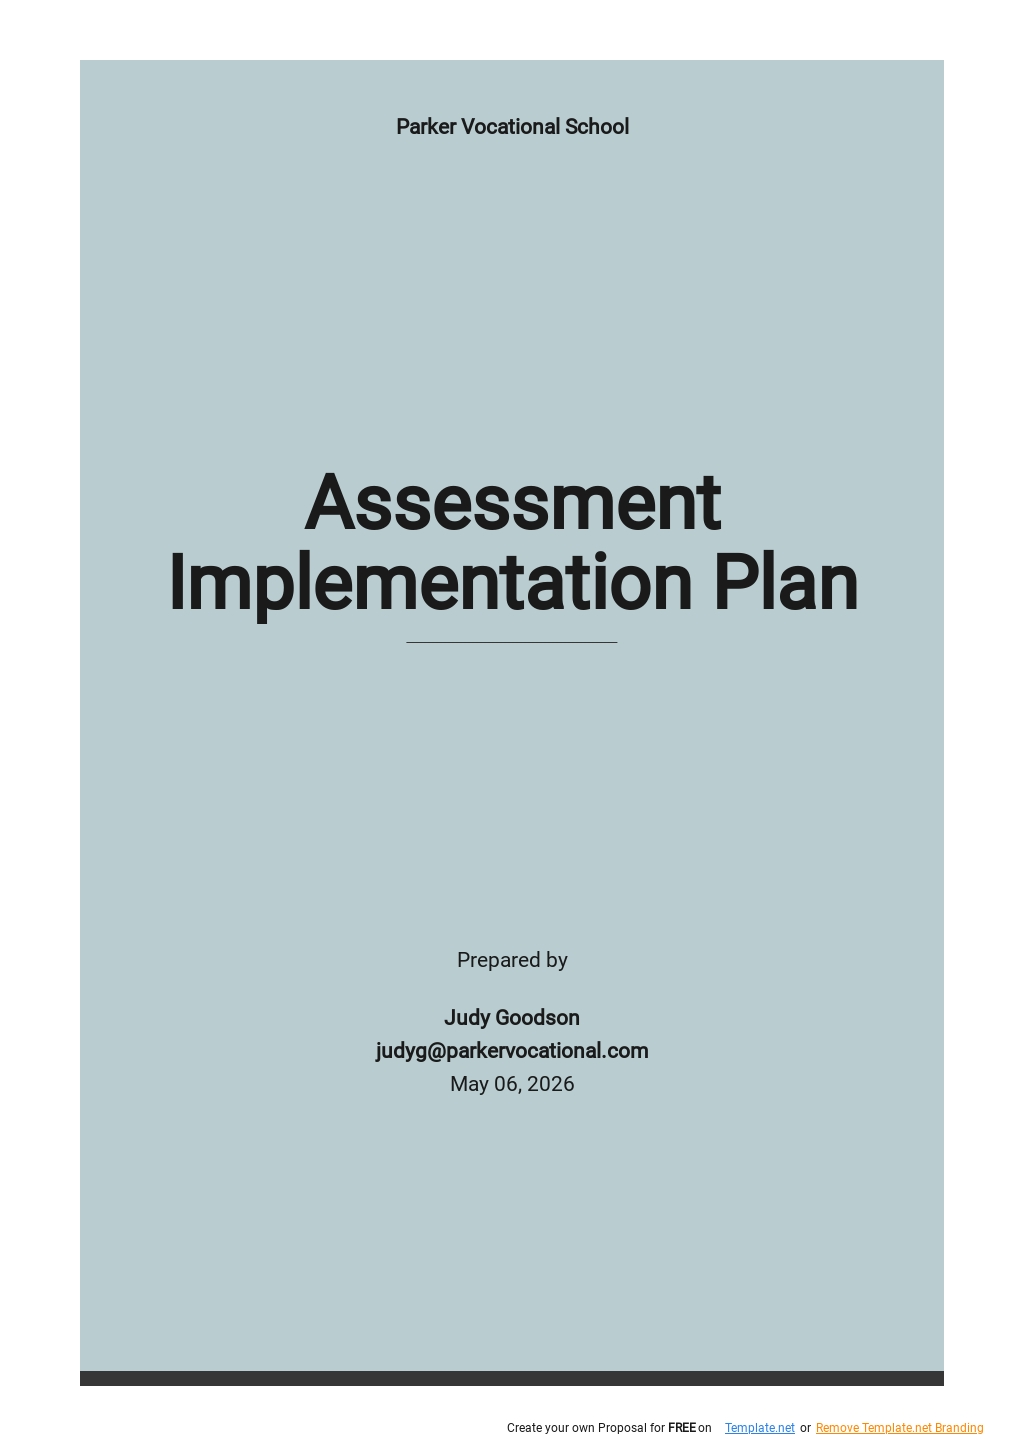 Assessment Implementation Plan Template.jpe